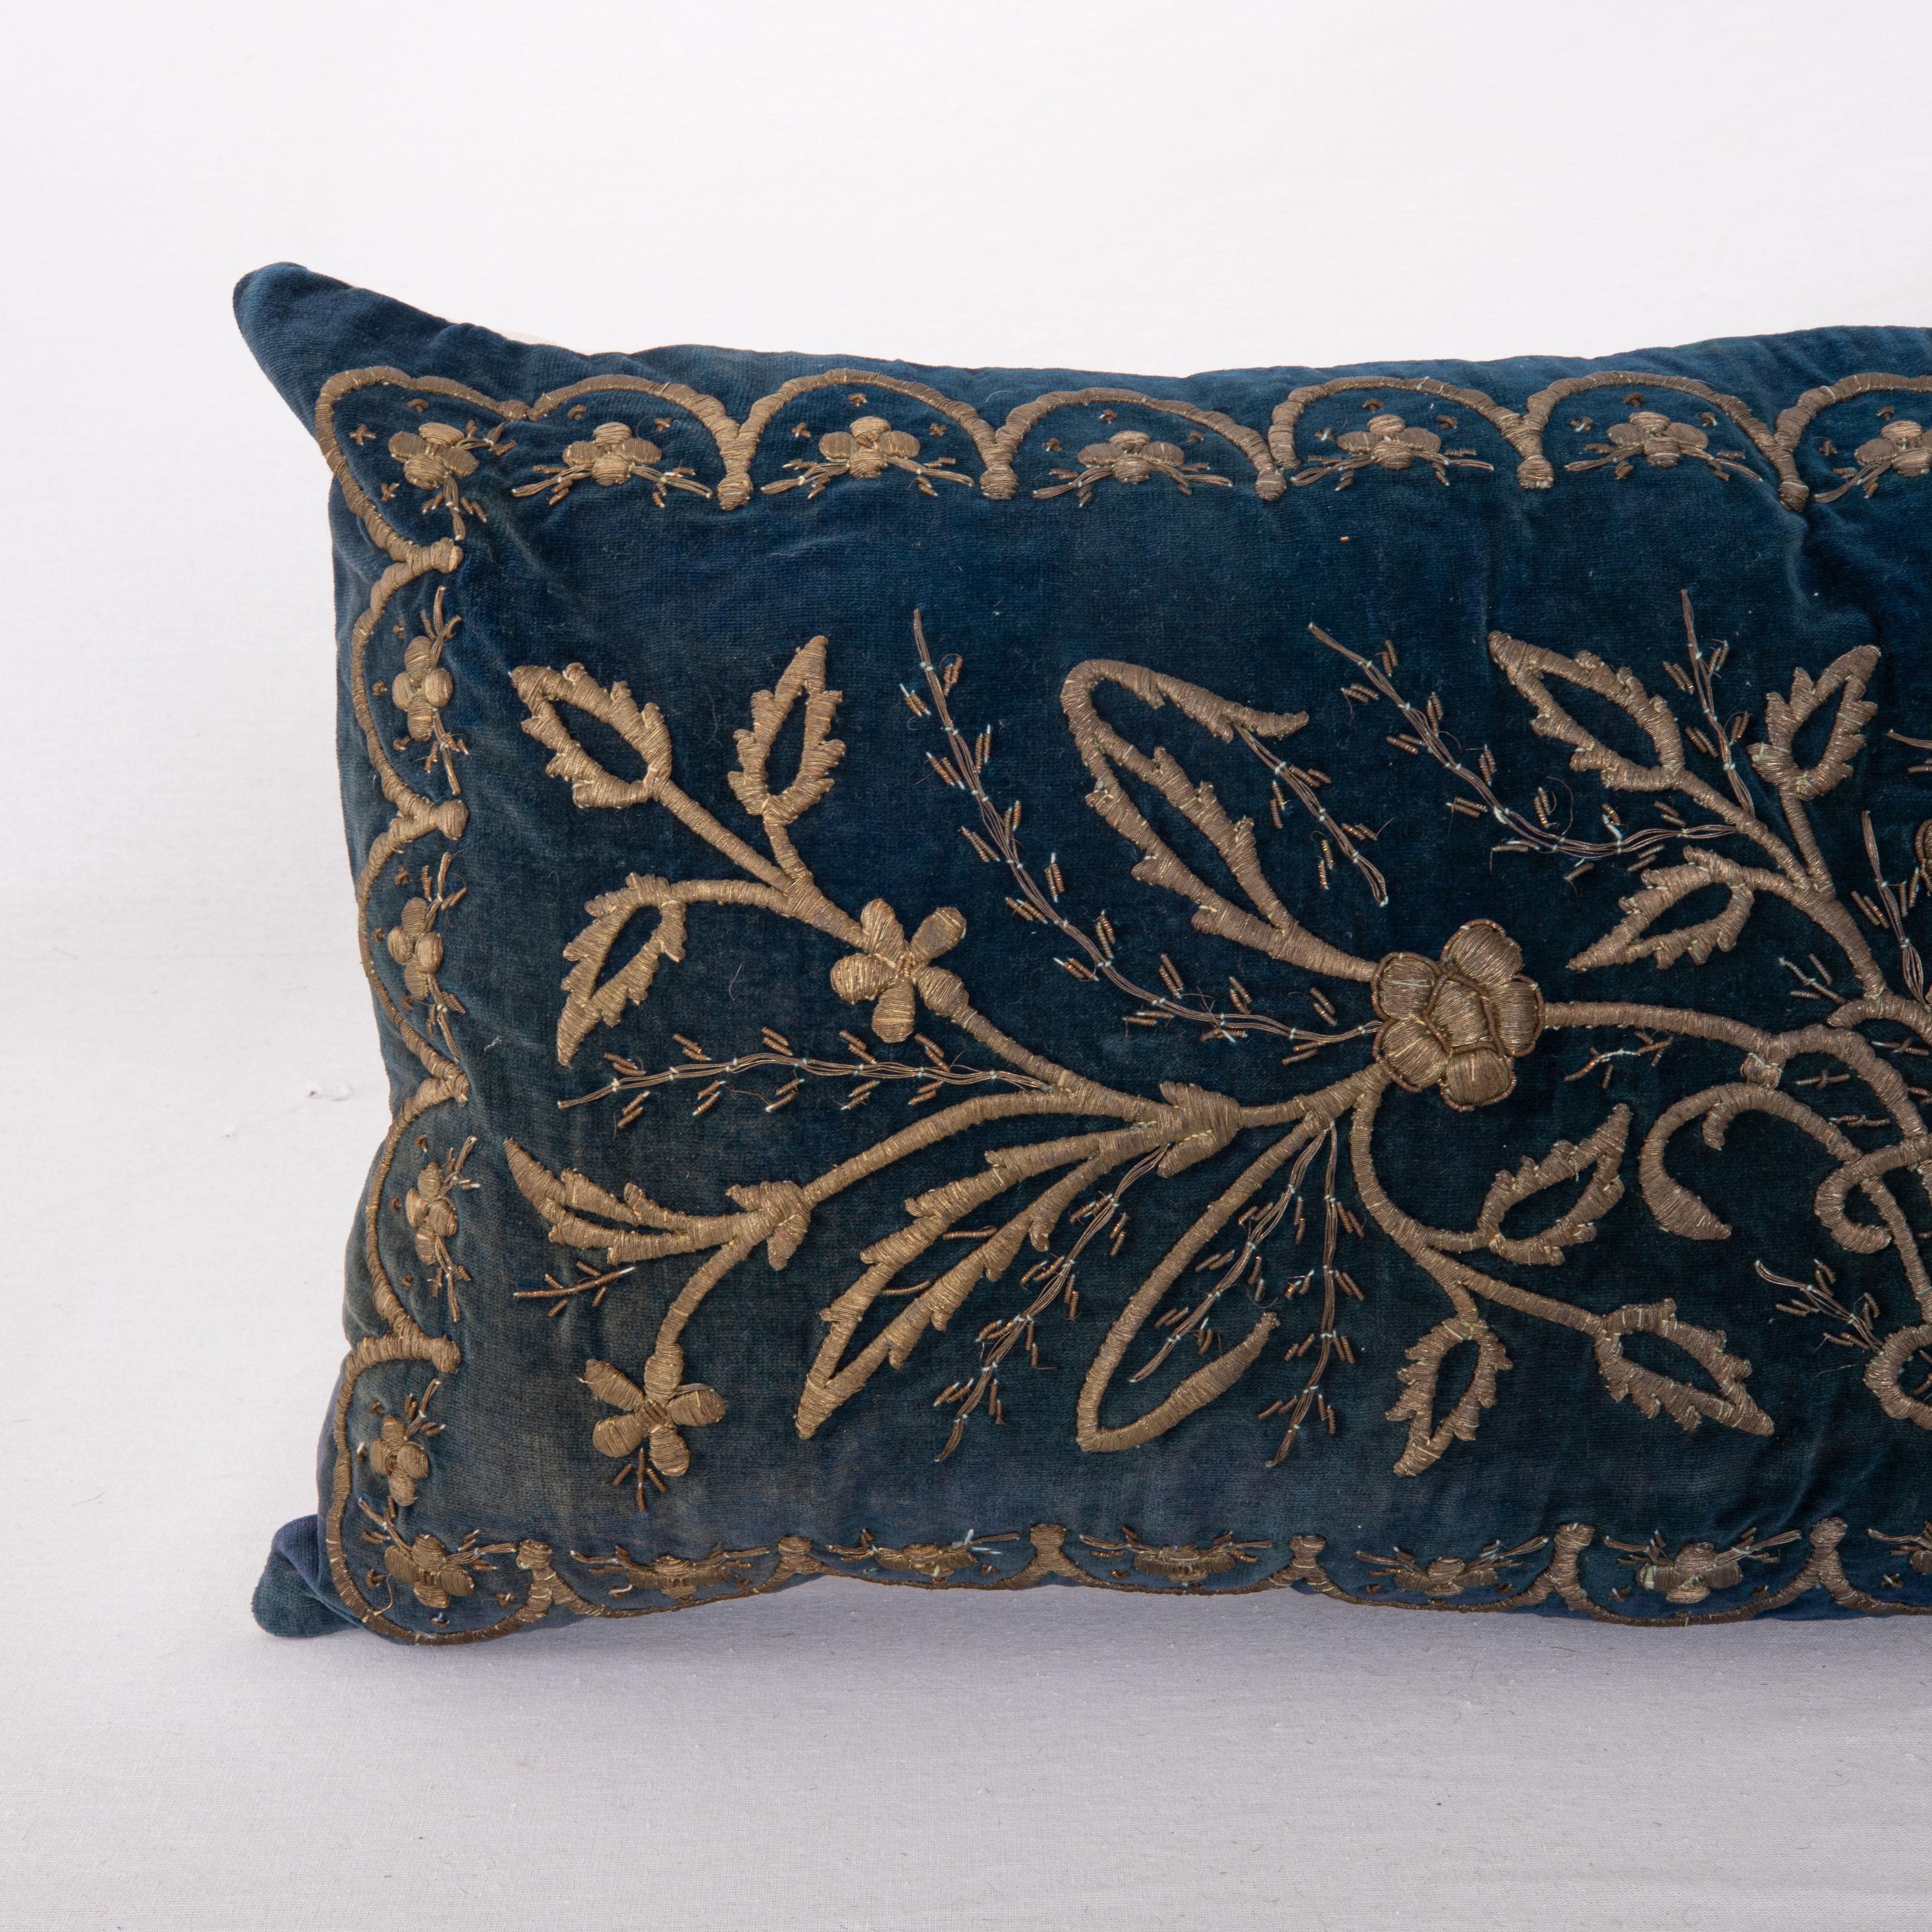 Islamic Antique Silk Velvet Ottoman Sarma Pillow Cover, Late 19th Century